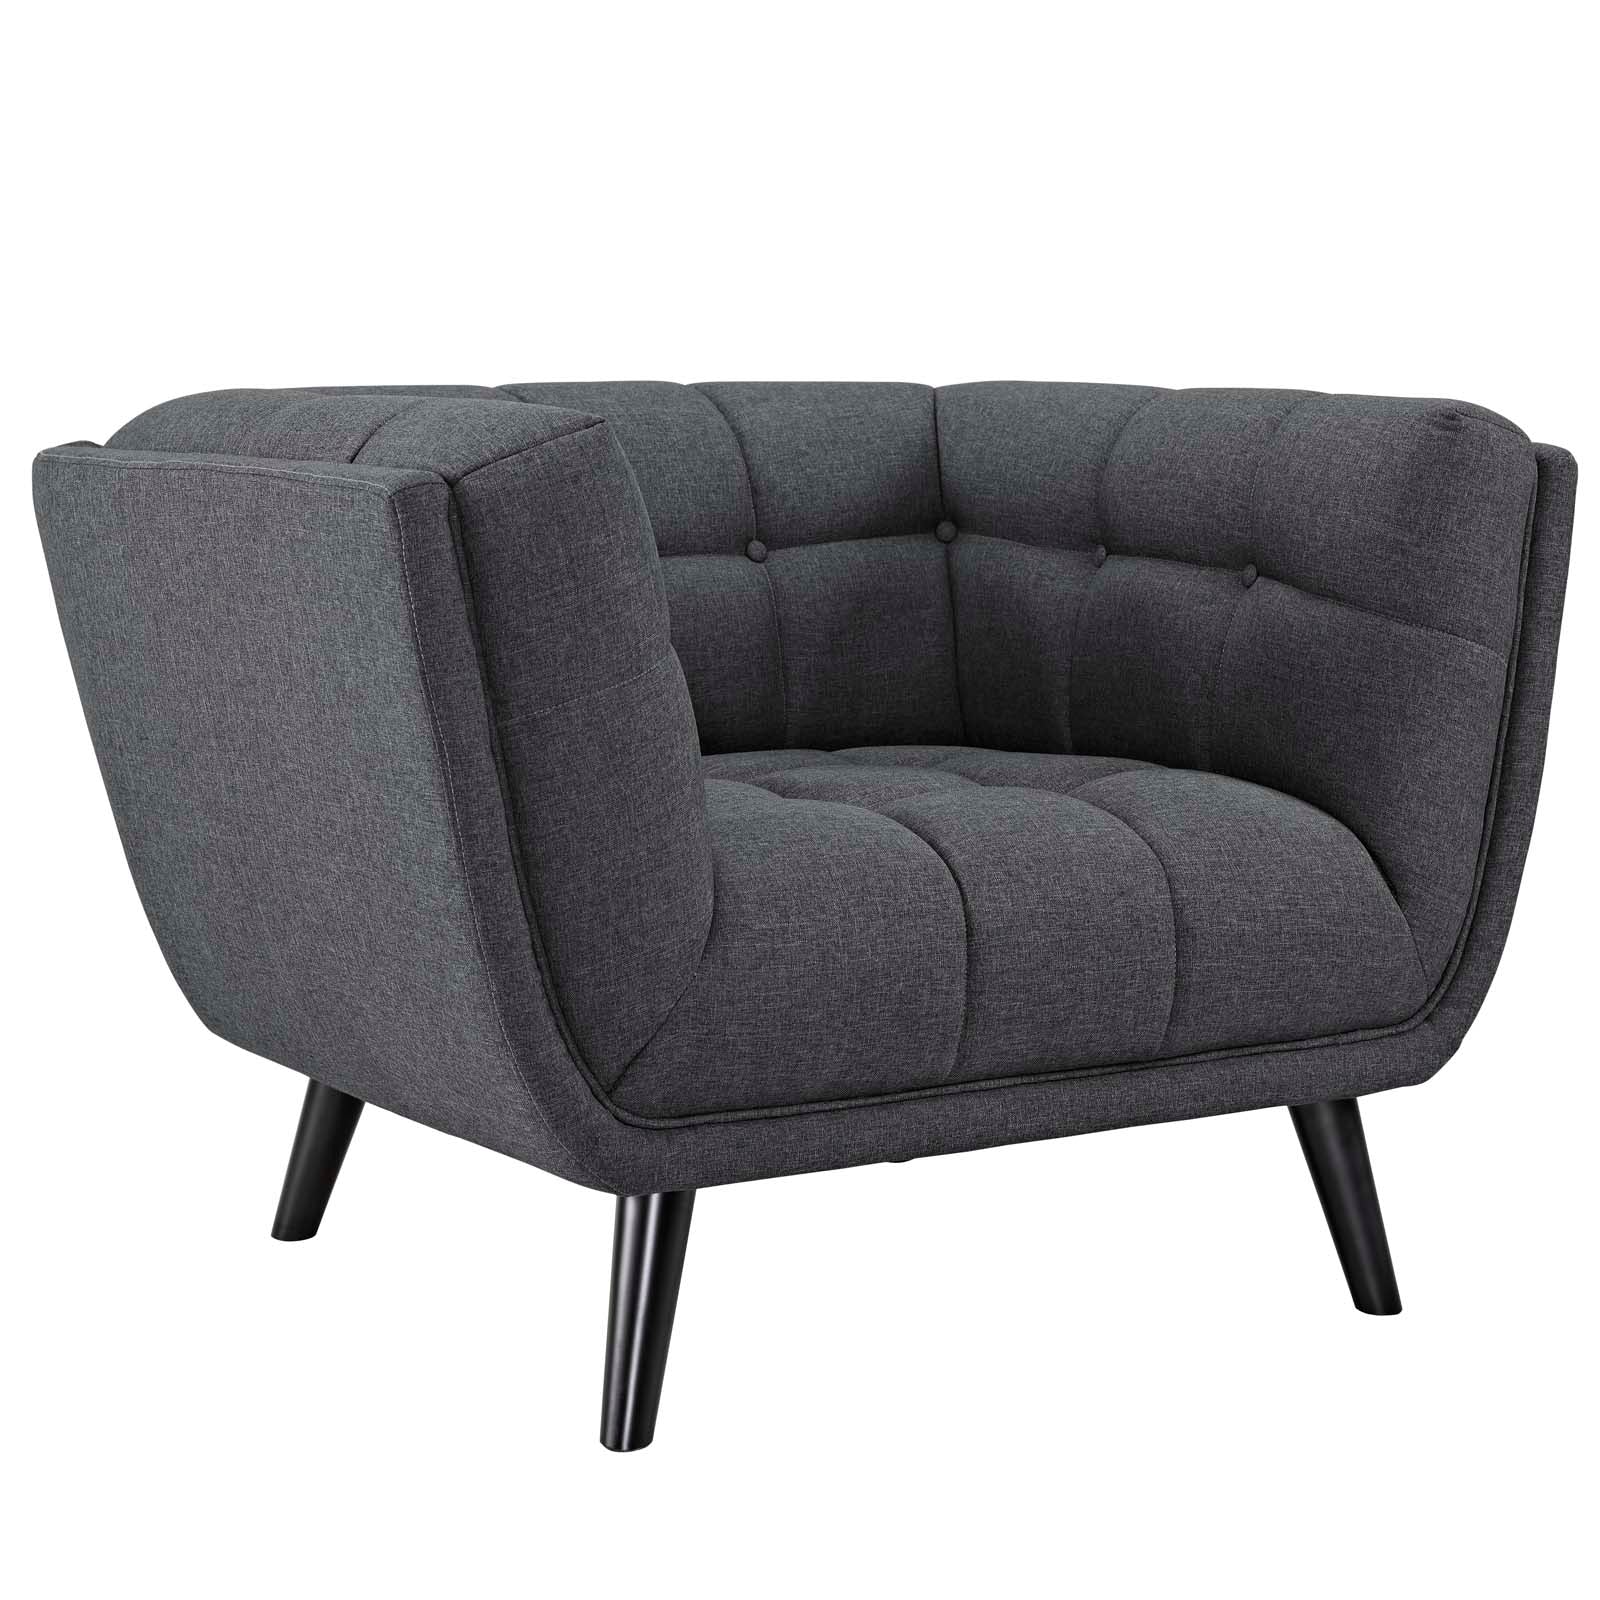 Bestow 2 Piece Upholstered Fabric Armchair Set